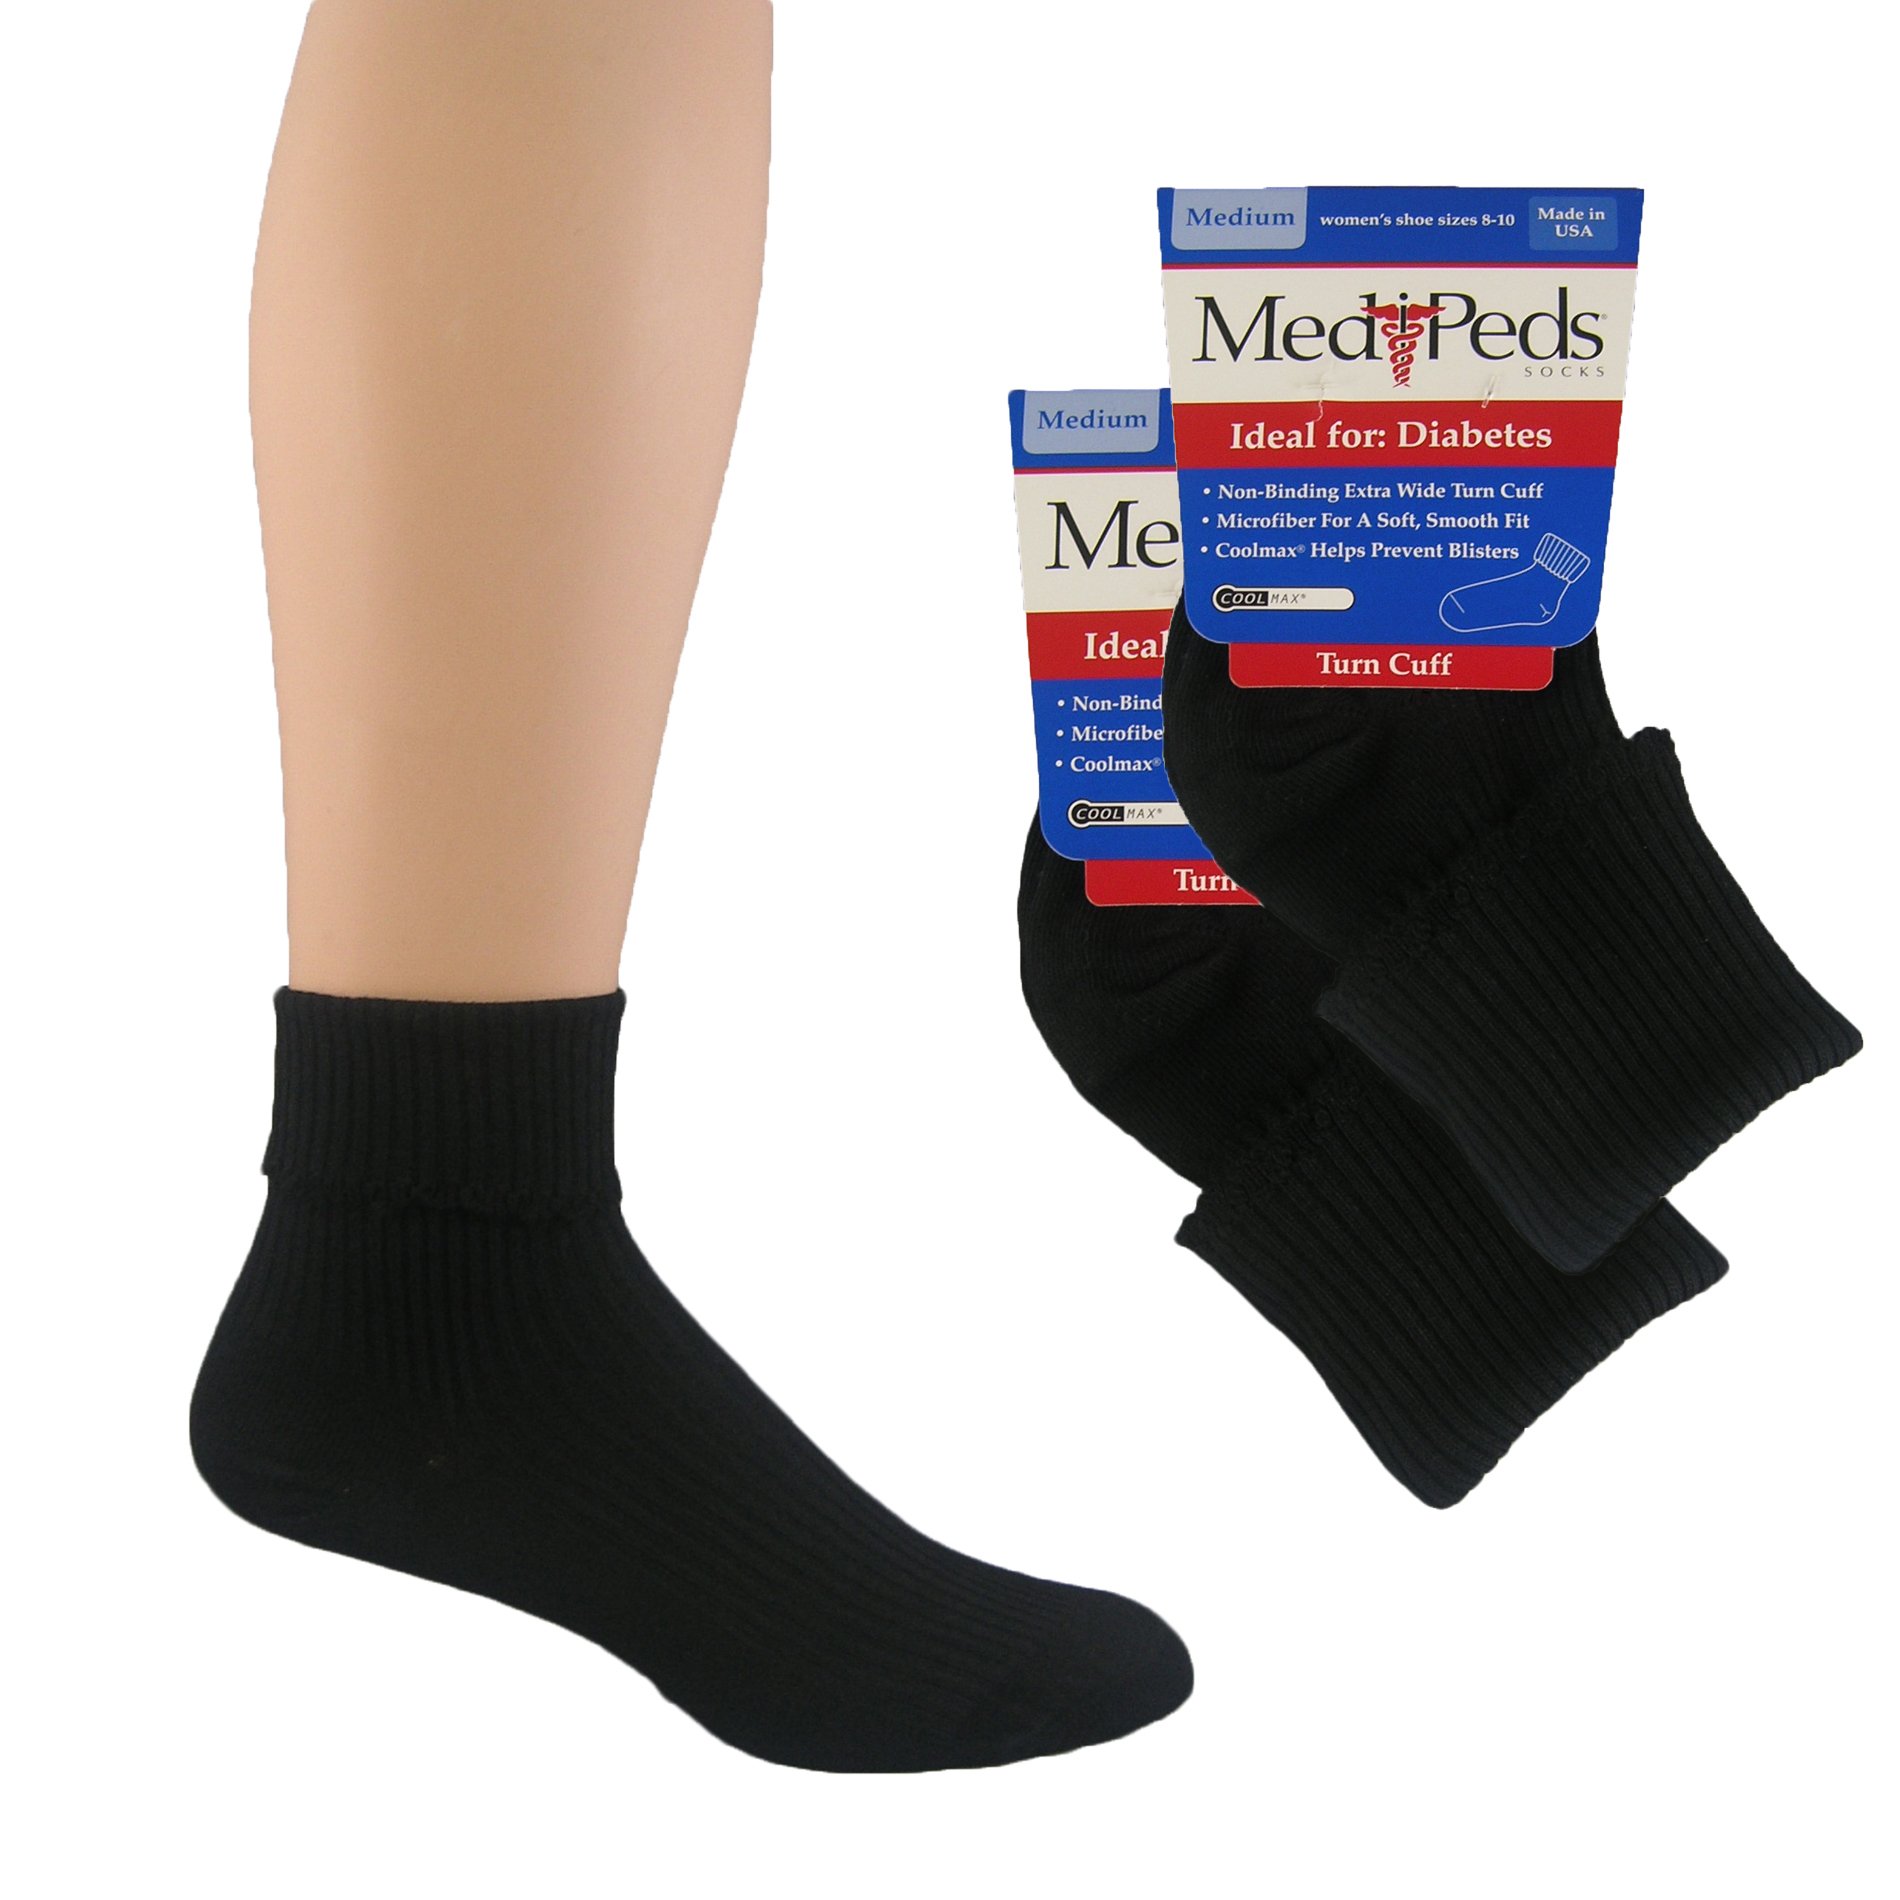 MediPeds Women's Diabetic Crew or Turn Cuff Socks - 2pr | Shop Your Way ...